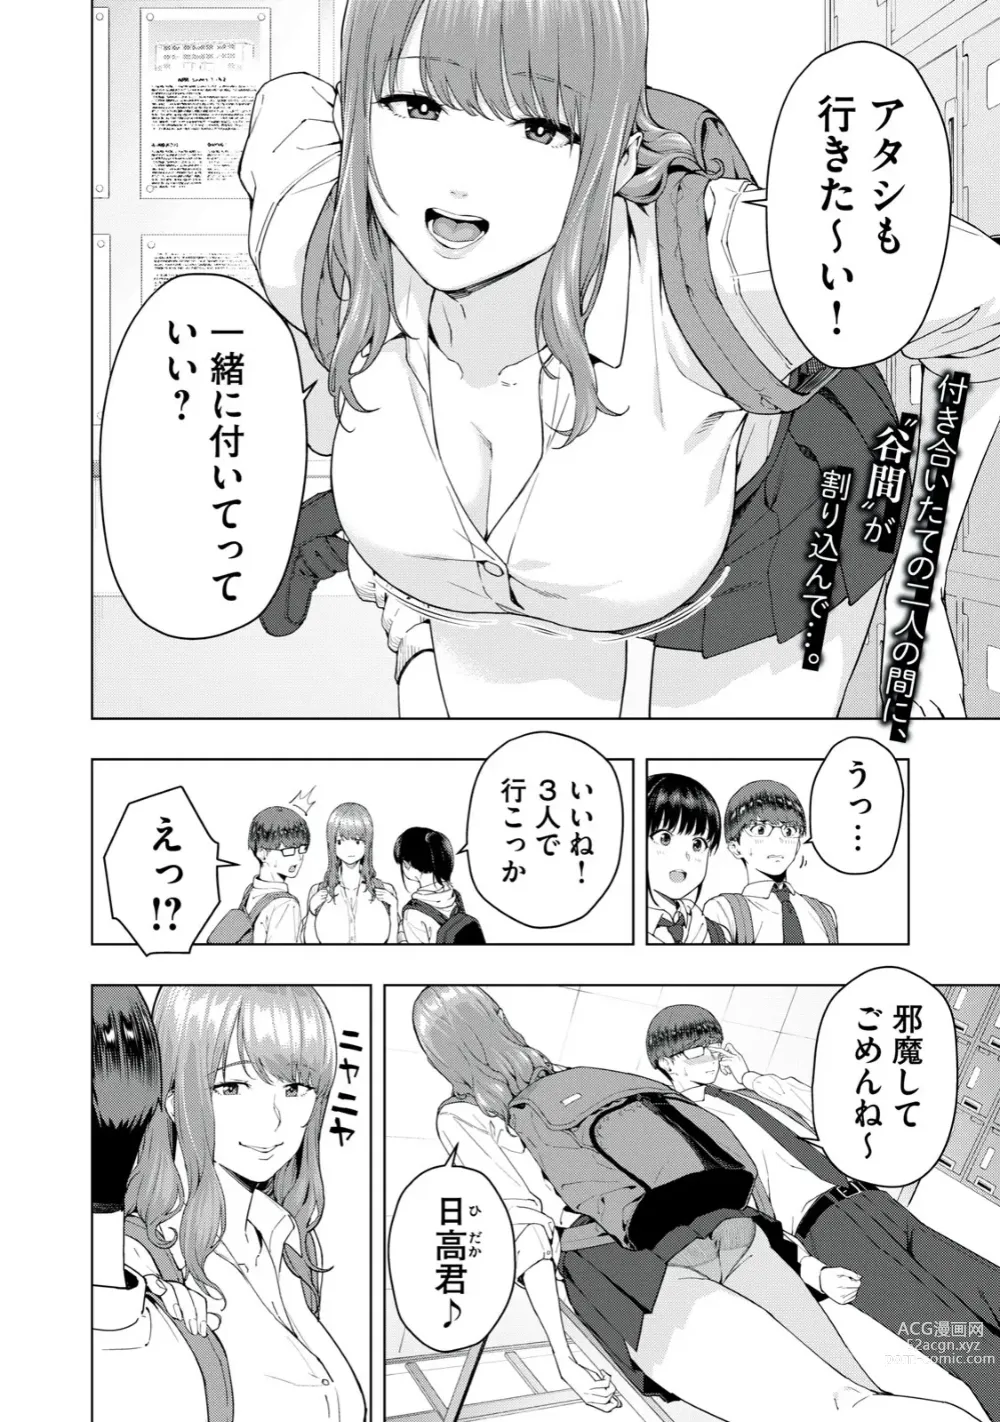 Page 3 of manga Kanojo no Tomodachi